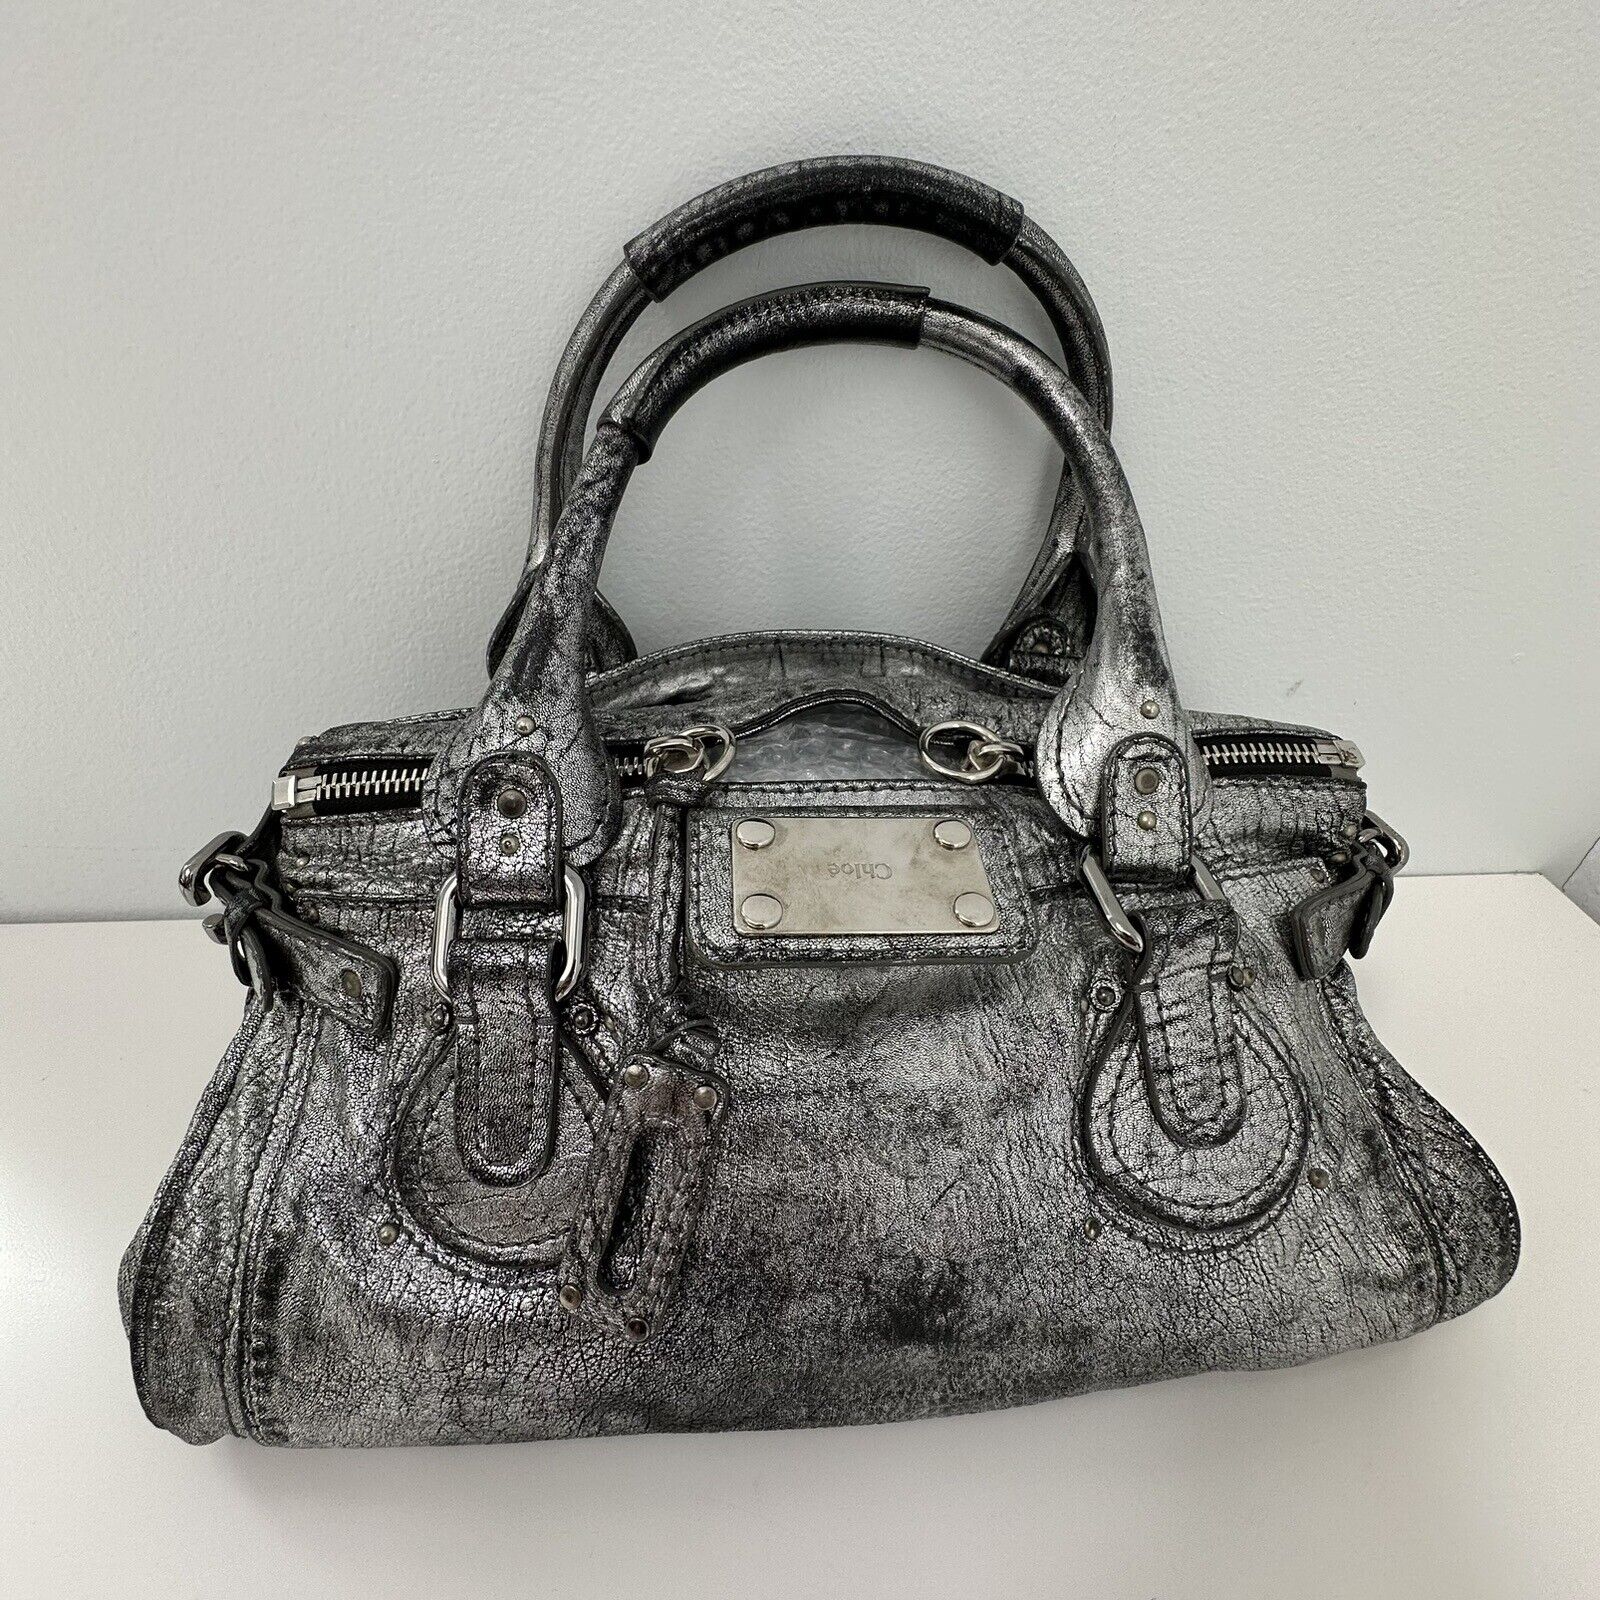 Chloe Purse Paddington Metallic Silver Leather Handbag Shoulder Bag NO LOCK